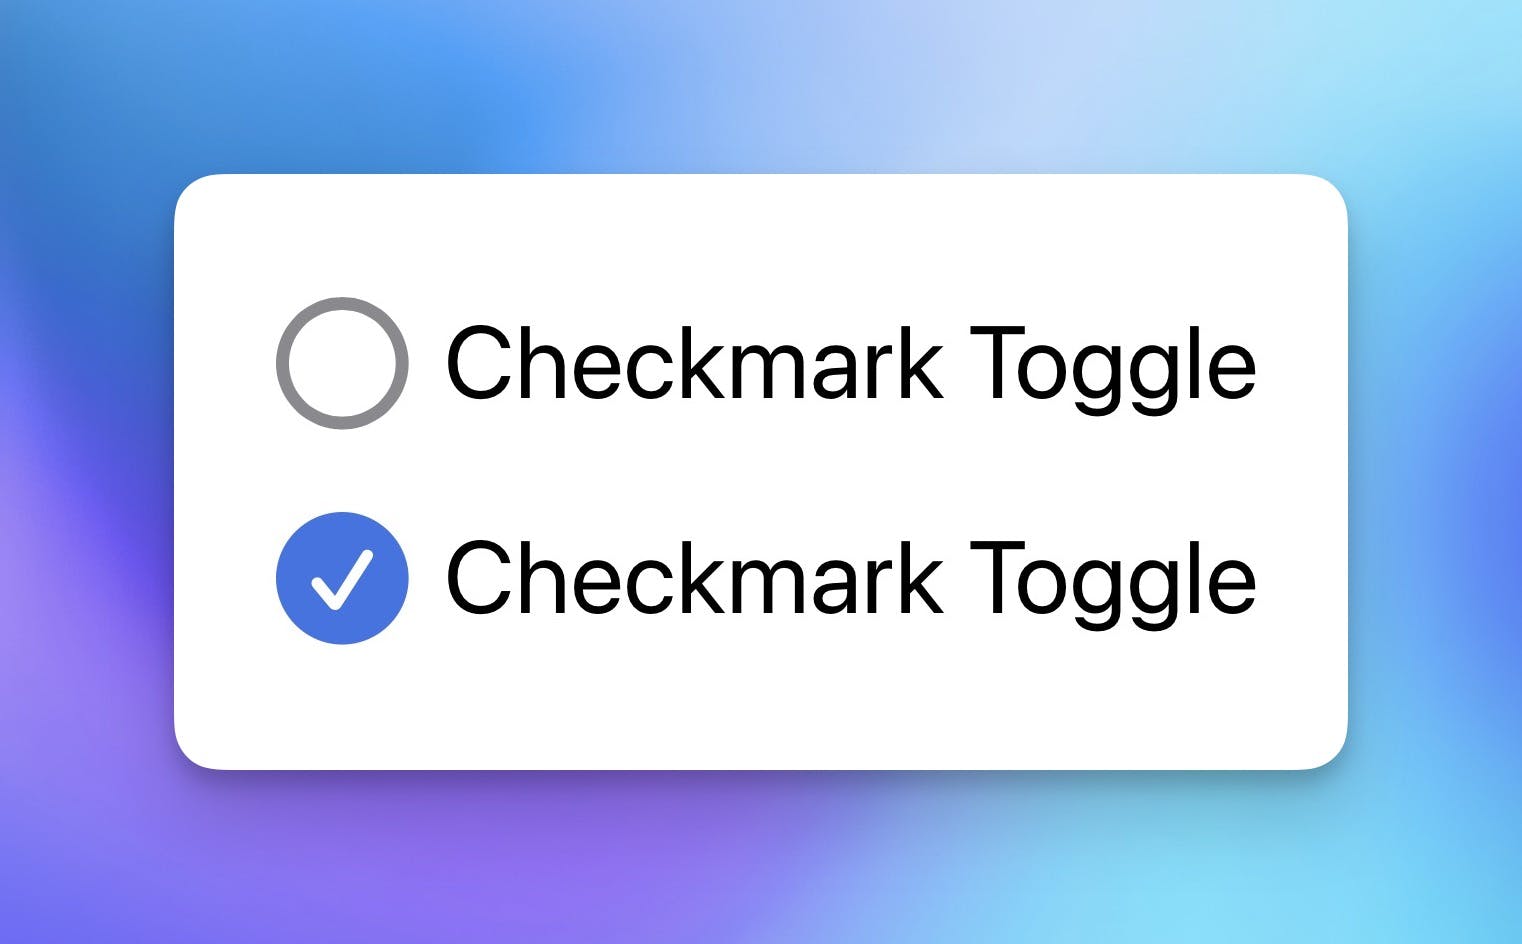 Checkmark Style Toggle